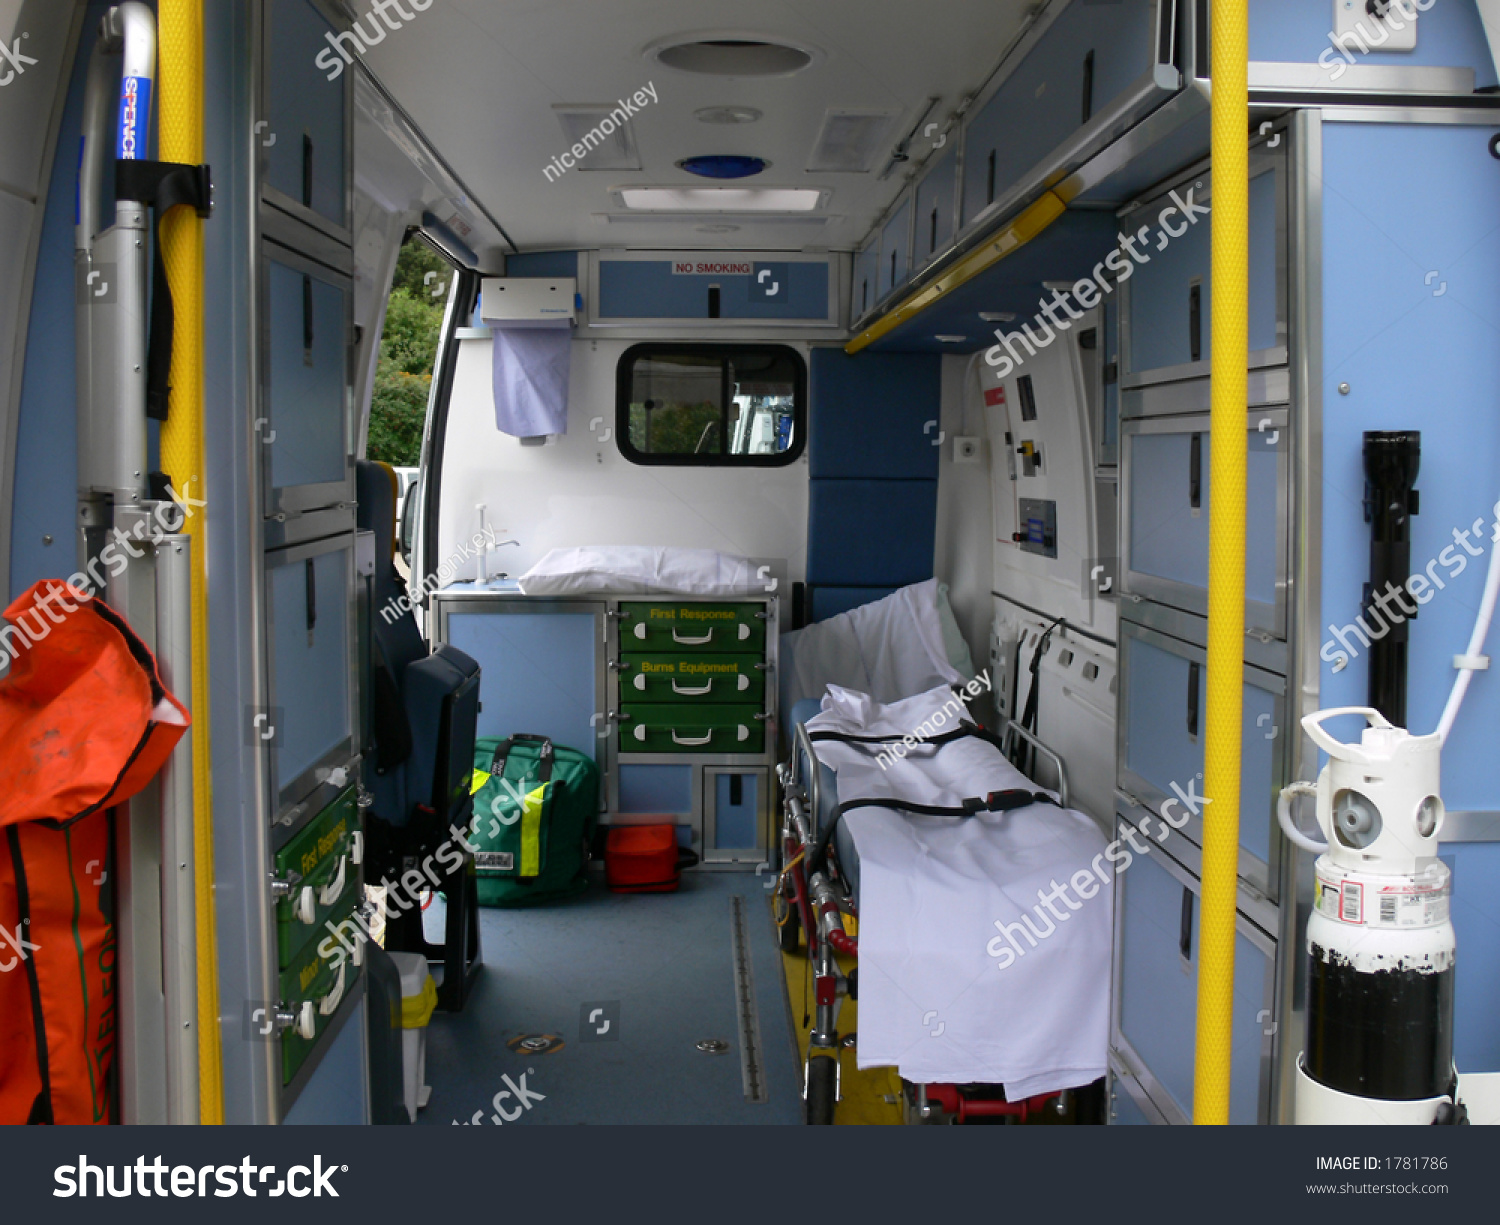 bed ambulance